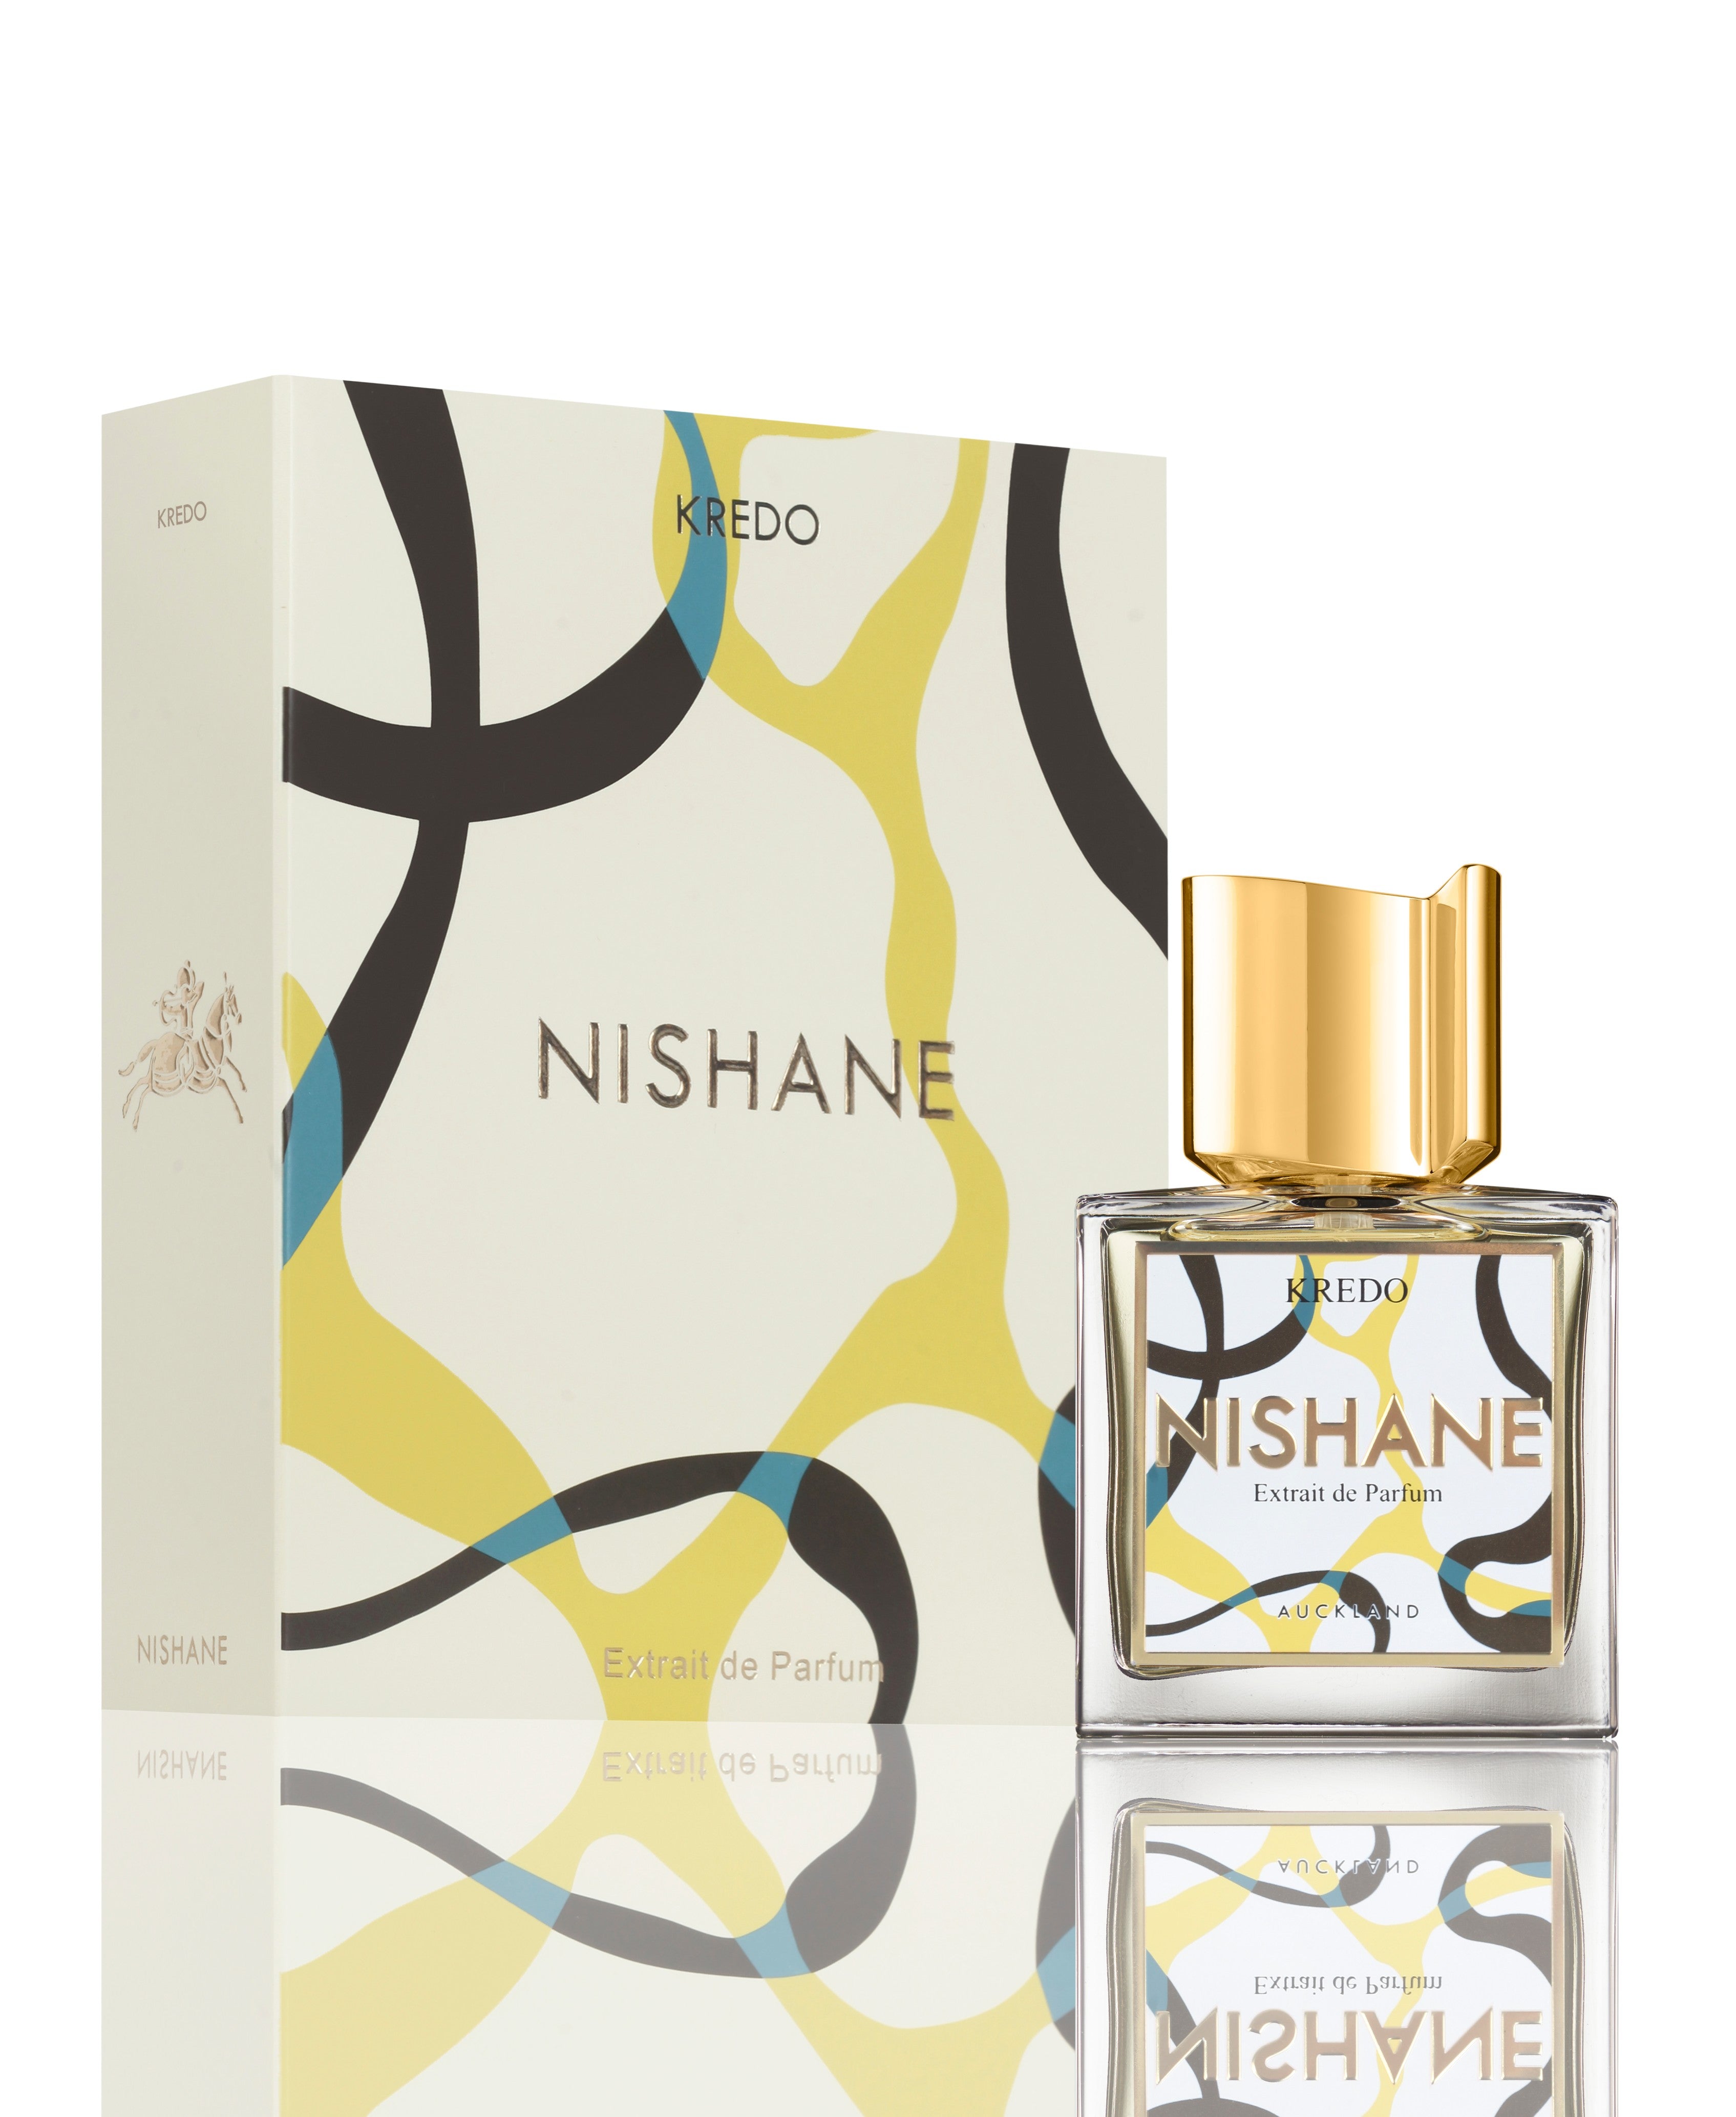 NISHANE Kredo Extrait de Parfum 100ml